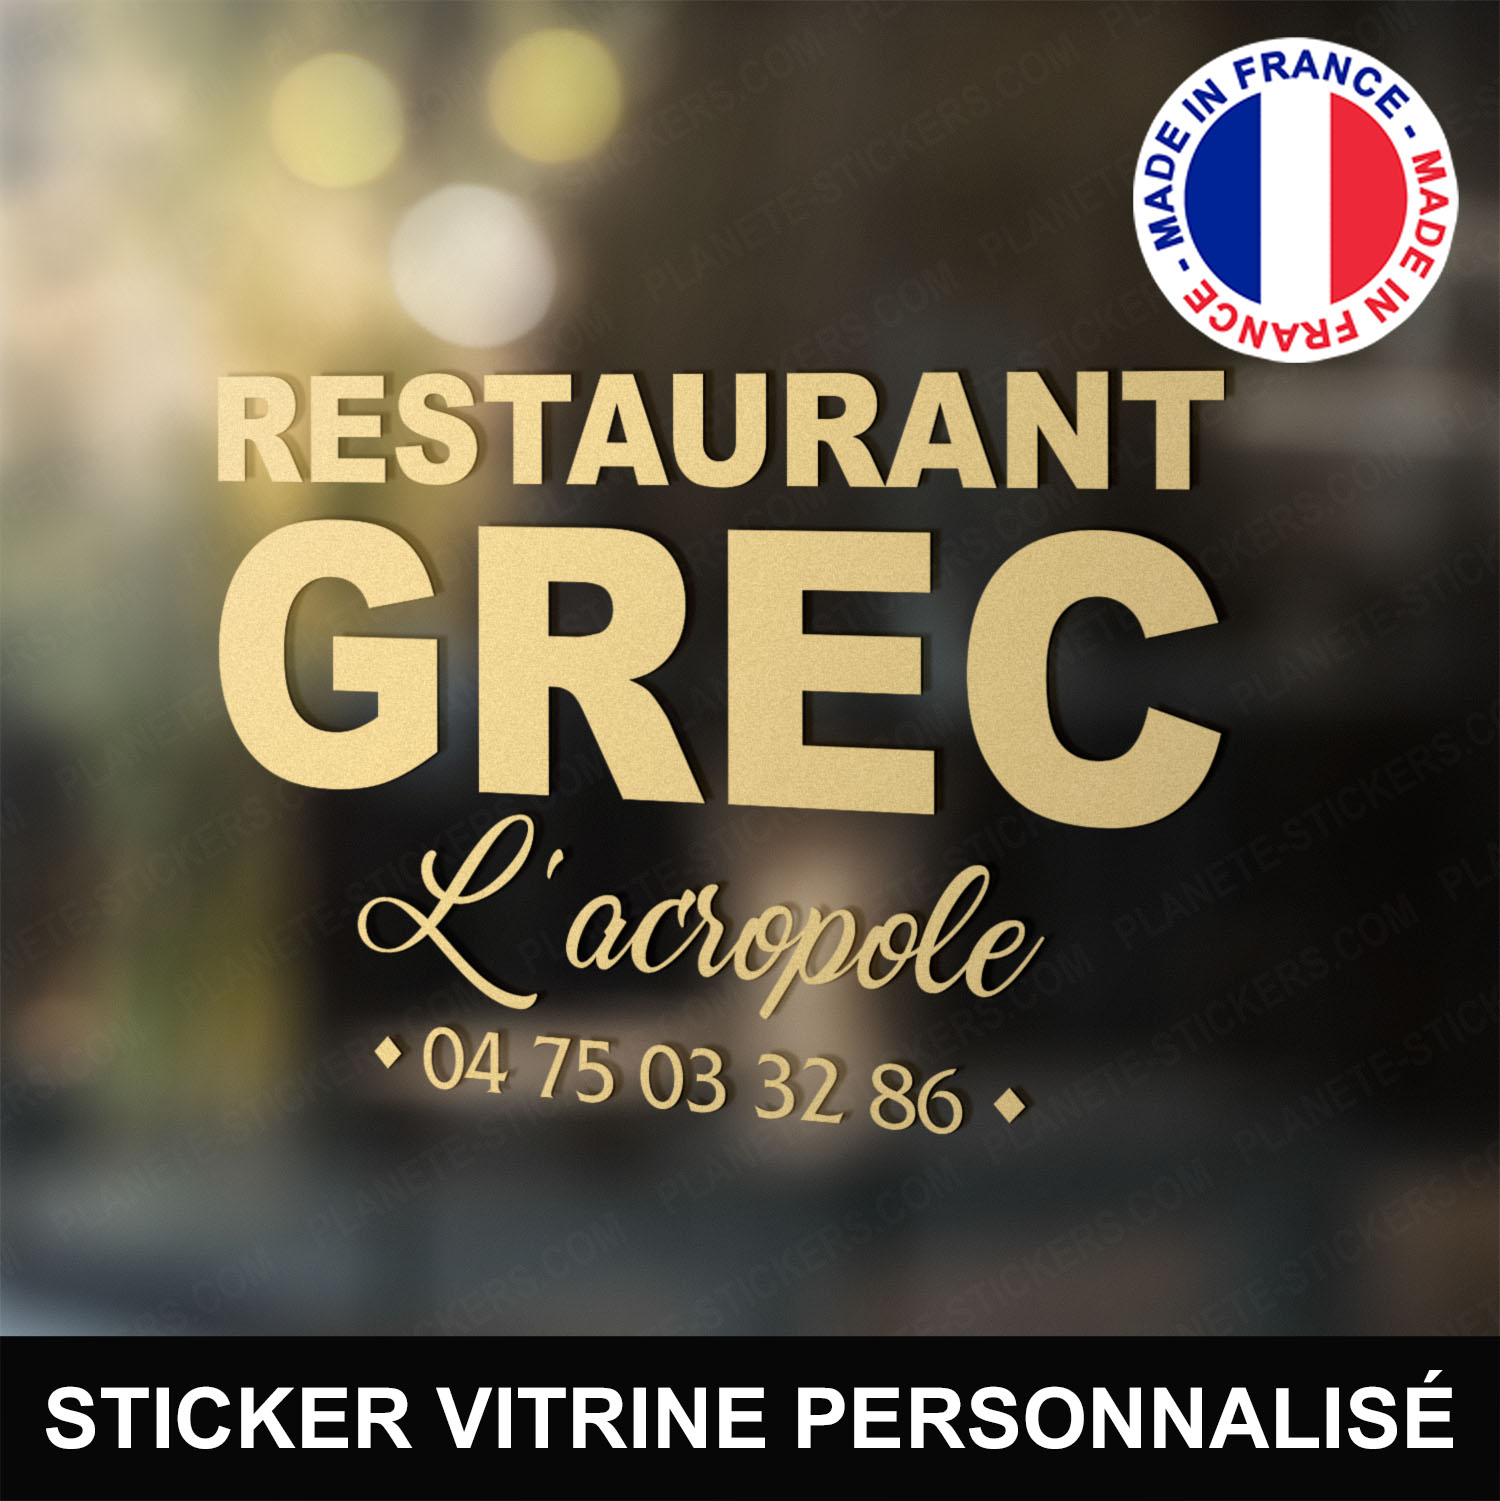 ref42restaurantvitrine-stickers-restaurant-grec-vitrine-restaurant-sticker-personnalisé-autocollant-pro-restaurateur-vitre-resto-professionnel-logo-personnalisable